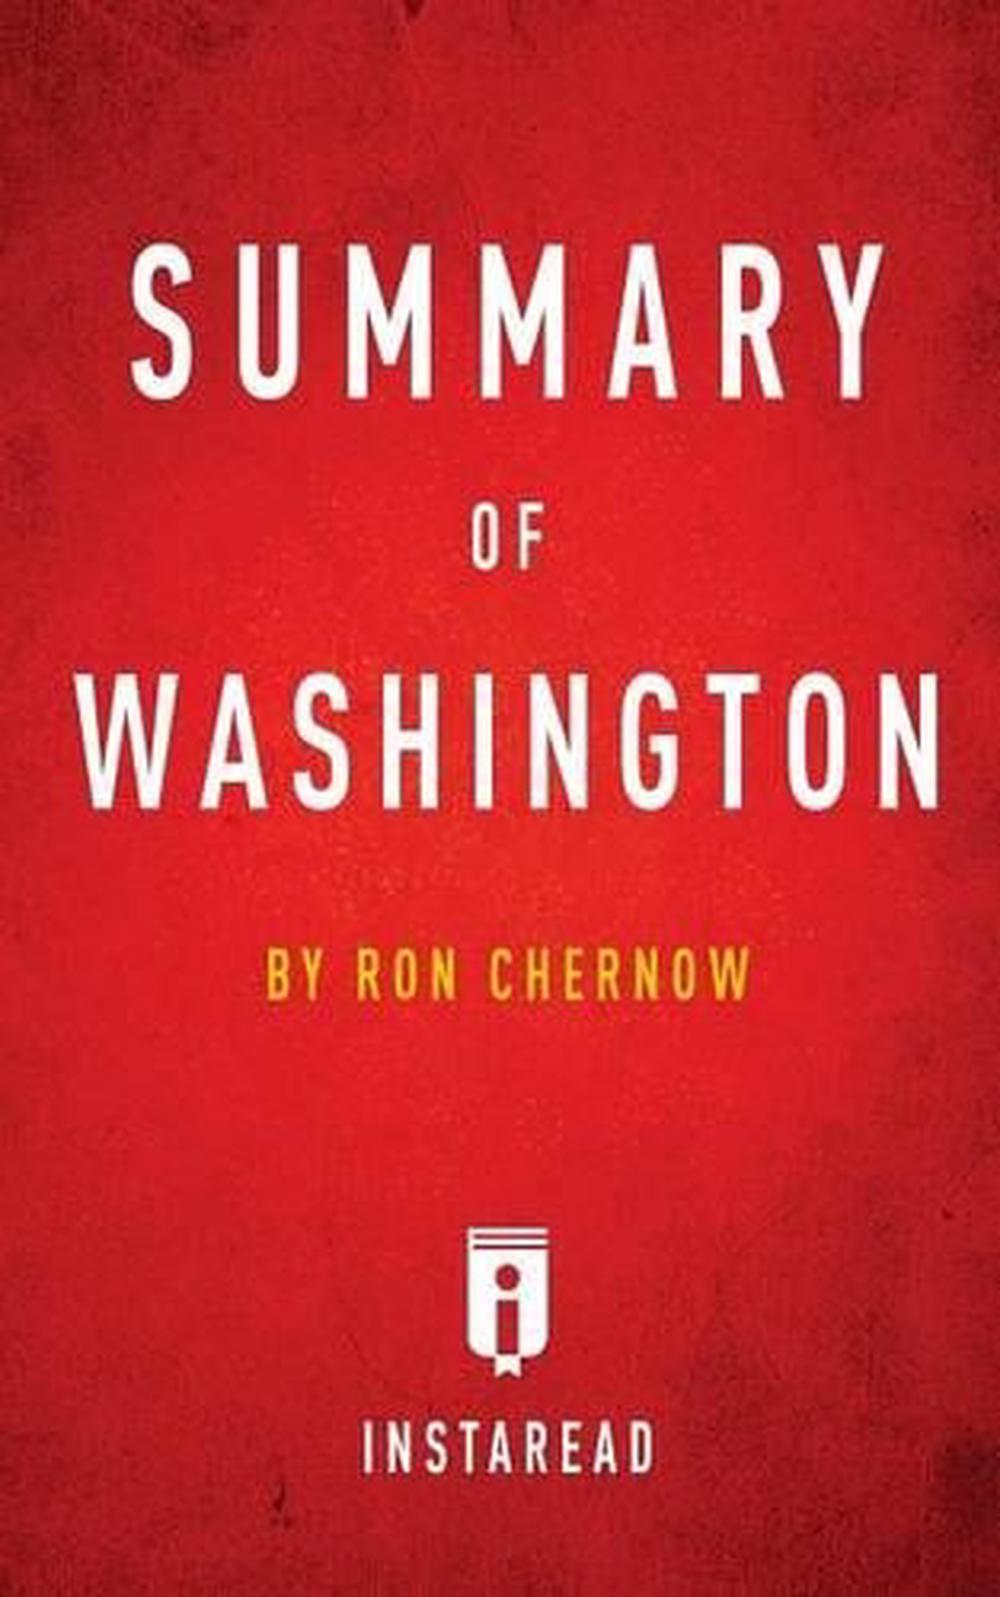 washington book by ron chernow